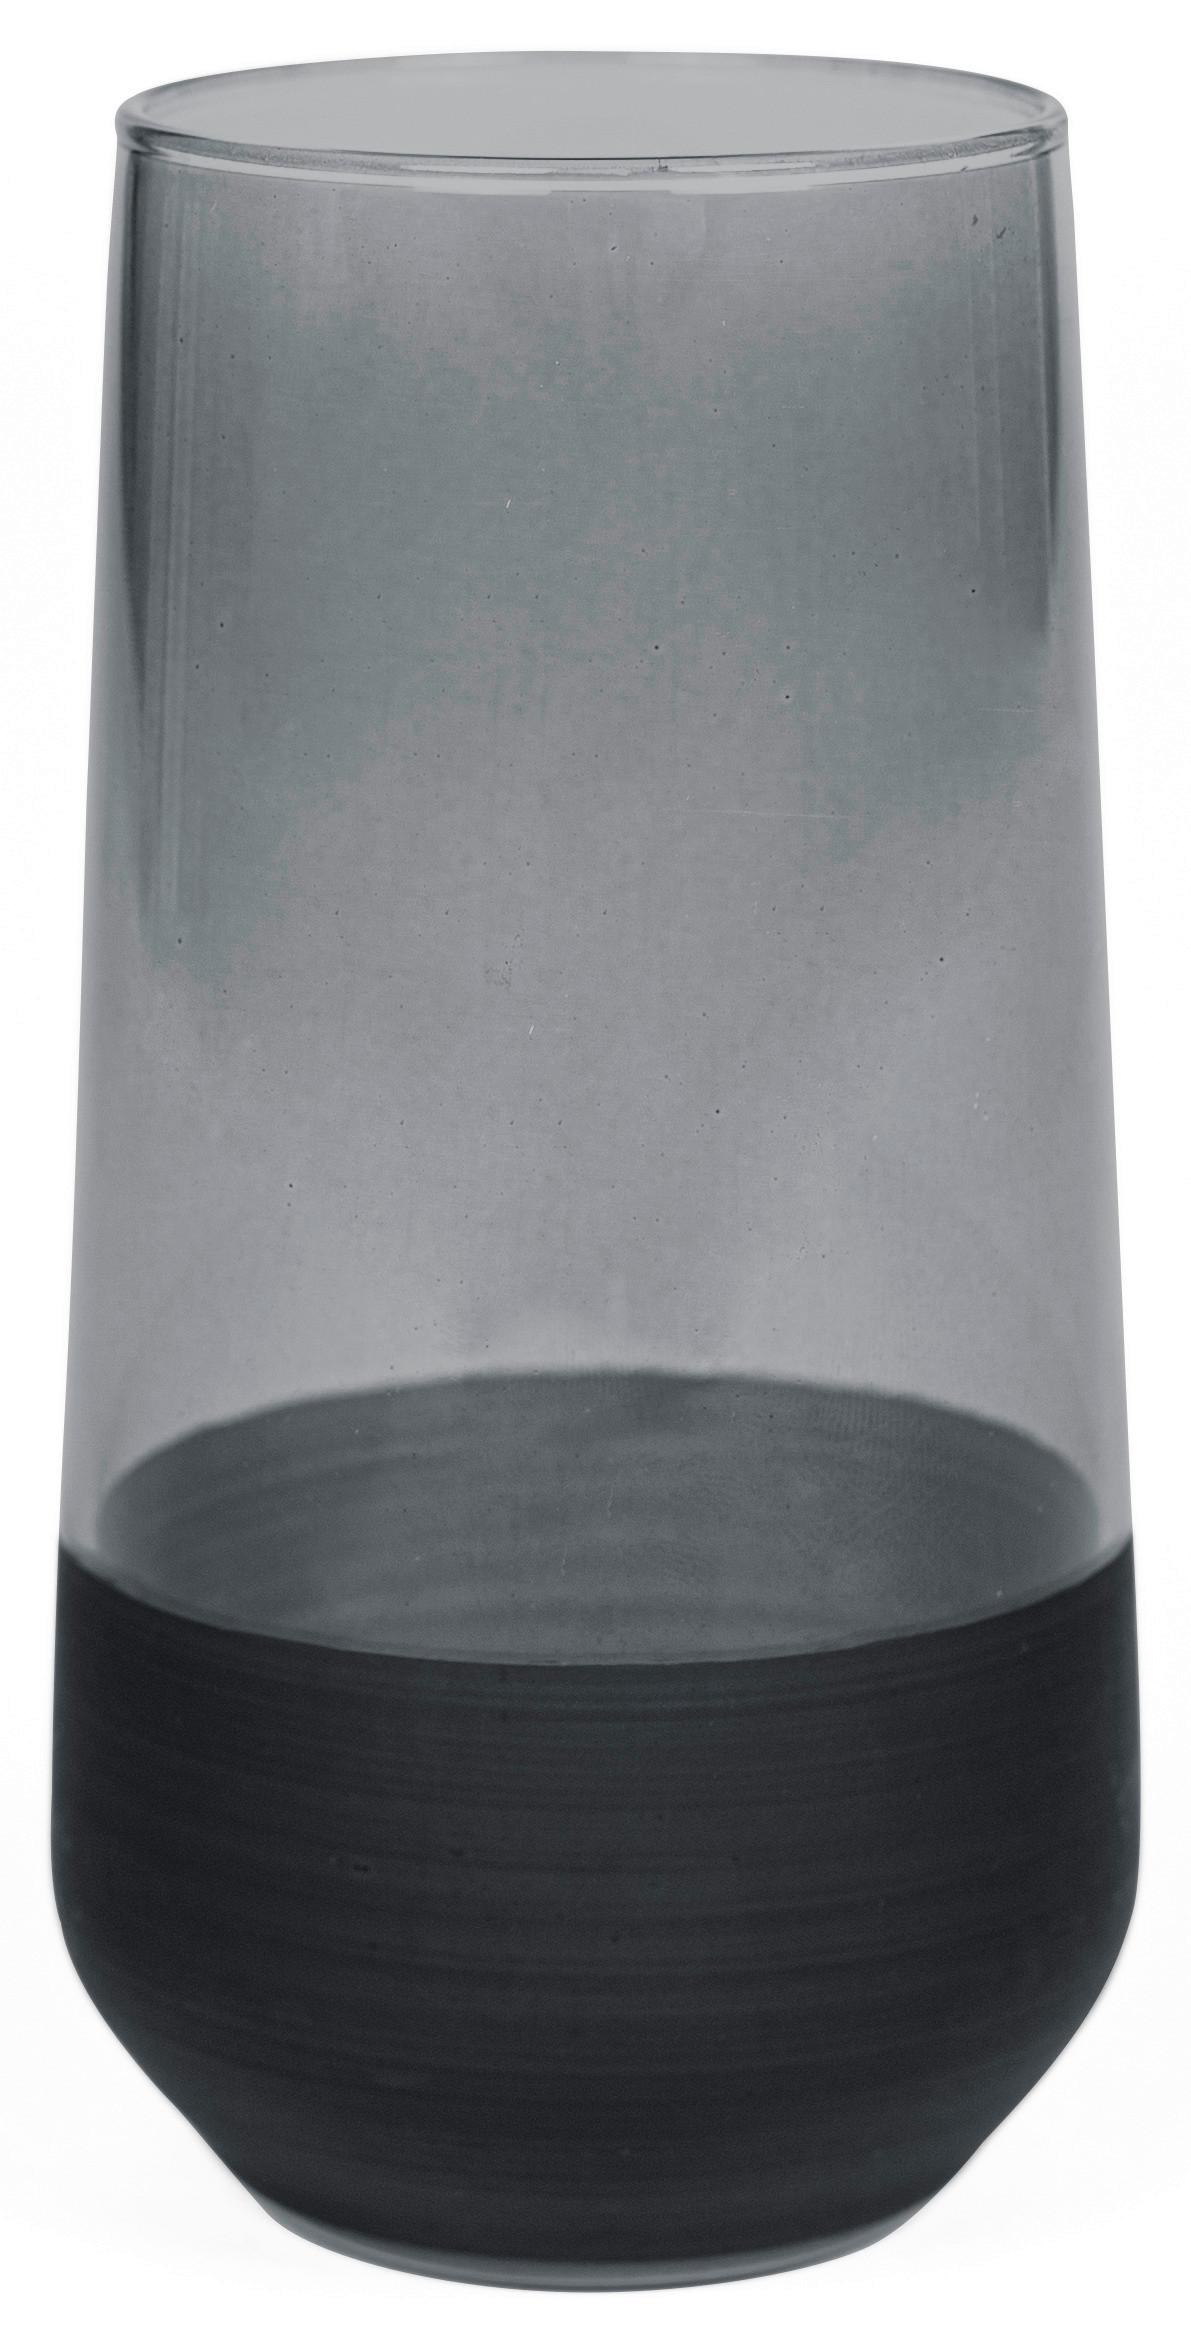 Sklenička Na Longdrink Black, 470ml - černá, Moderní, sklo (6,5/15cm) - Premium Living